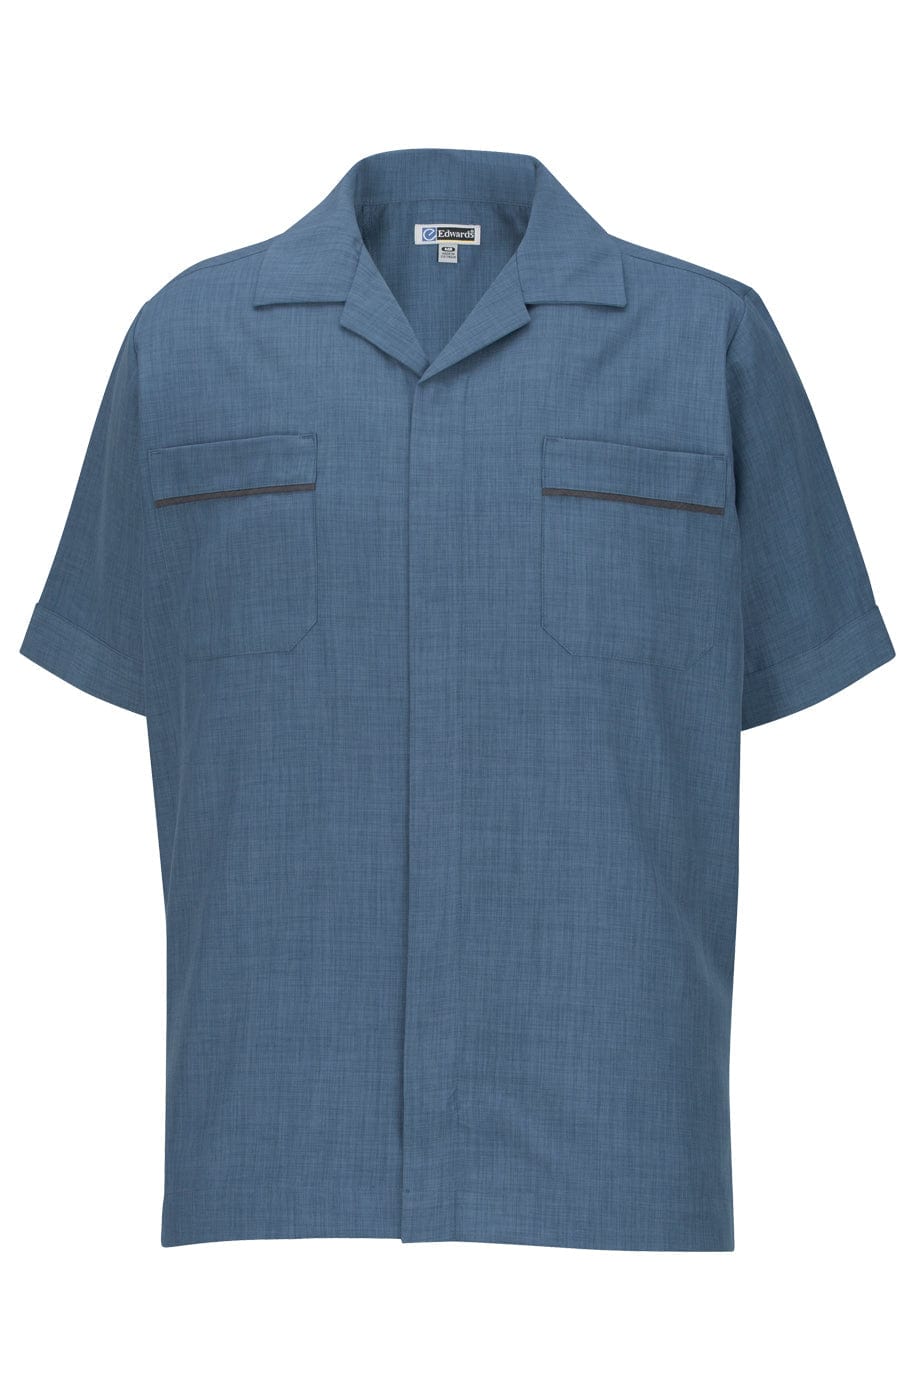 Edwards S Men's Pinnacle Service Shirt - Riviera Blue